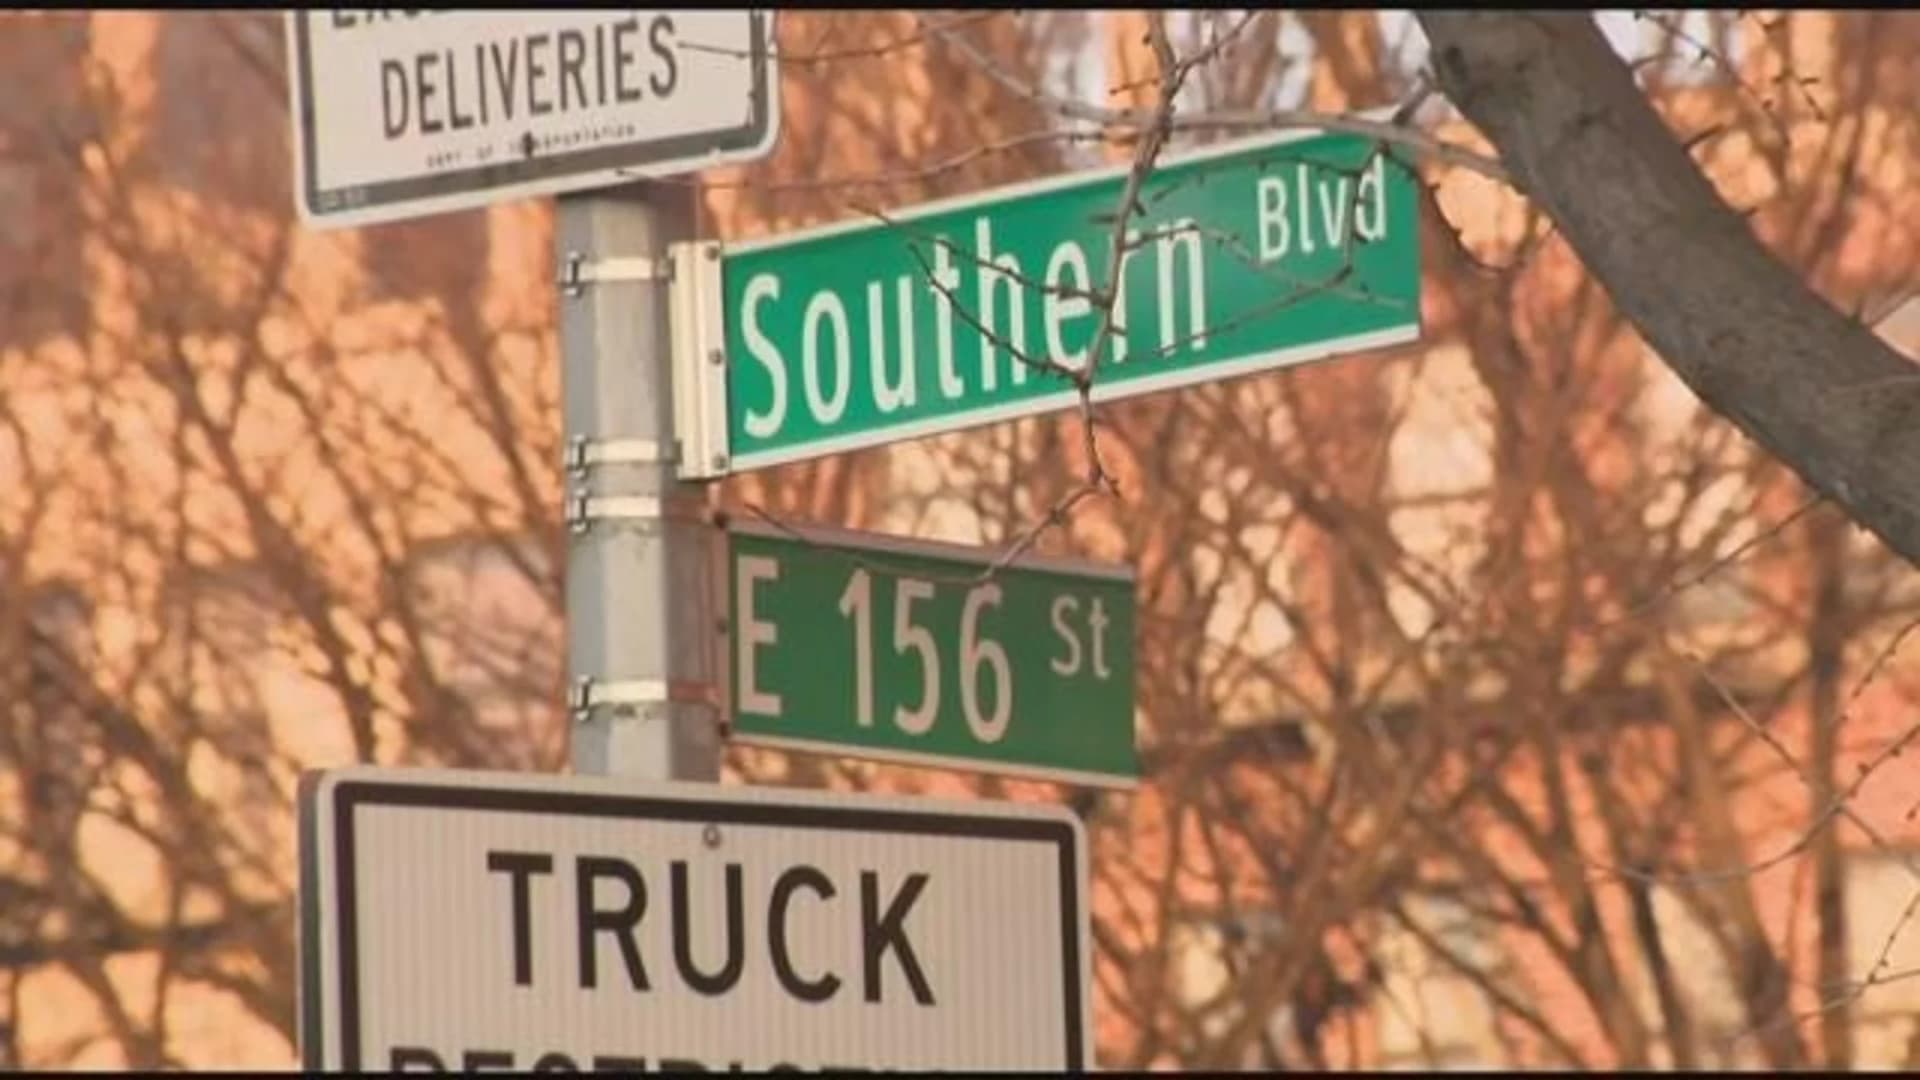 Police: Man shot on Southern Boulevard